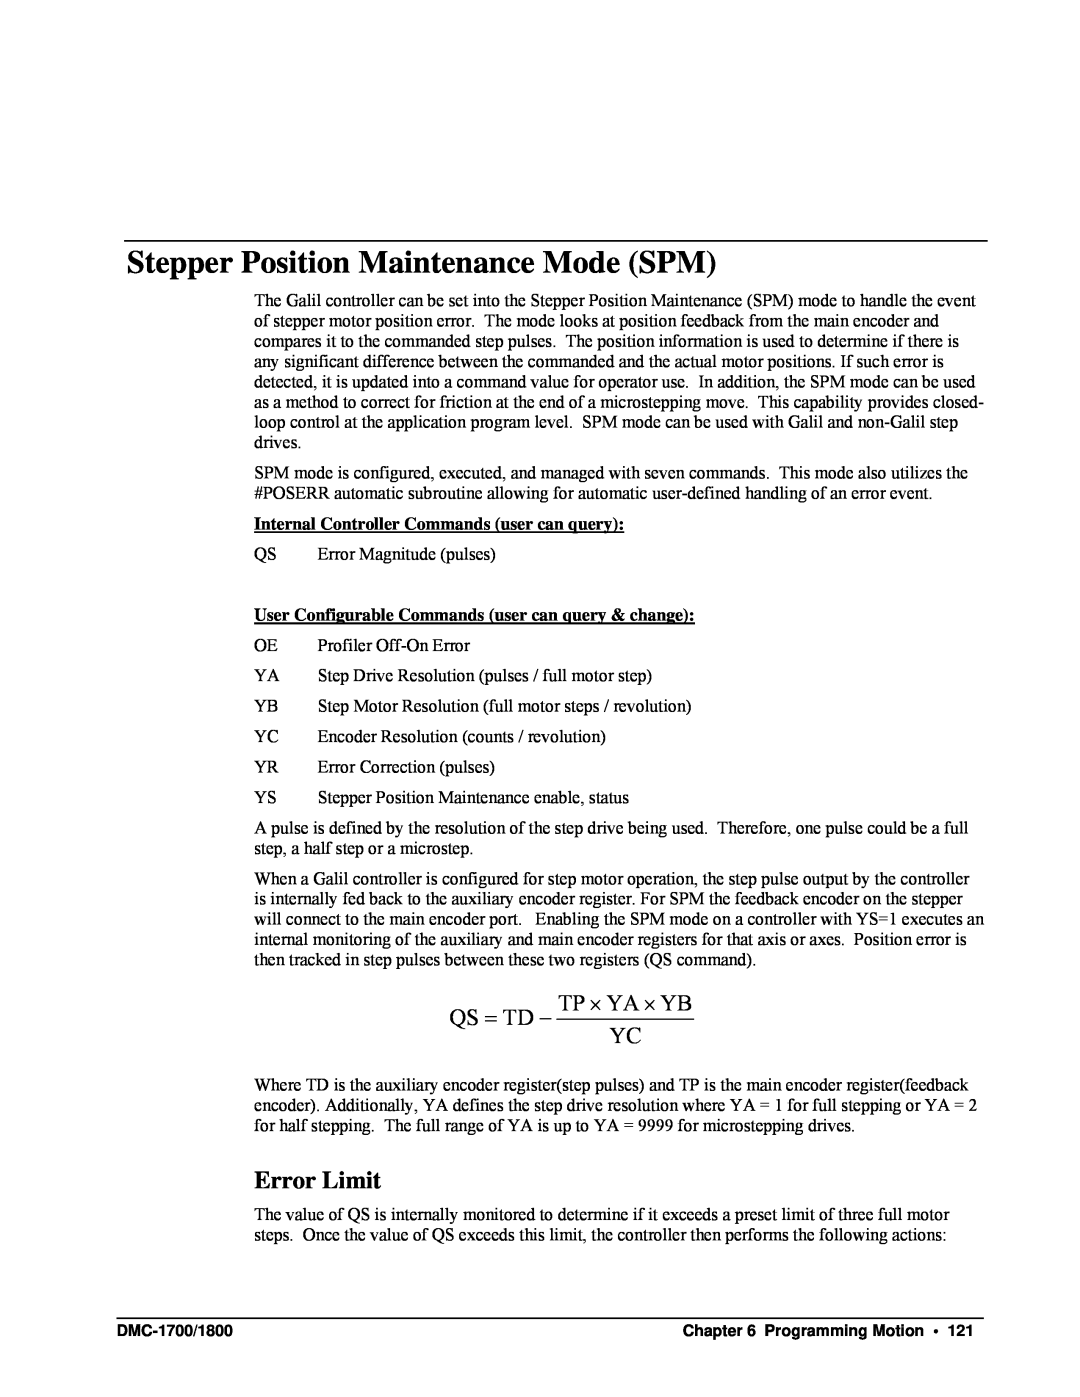 Galil DMC-1700, DMC-1800 user manual Stepper Position Maintenance Mode SPM, Error Limit, Qs = Td − Tp ⋅ Ya ⋅ Yb Yc 